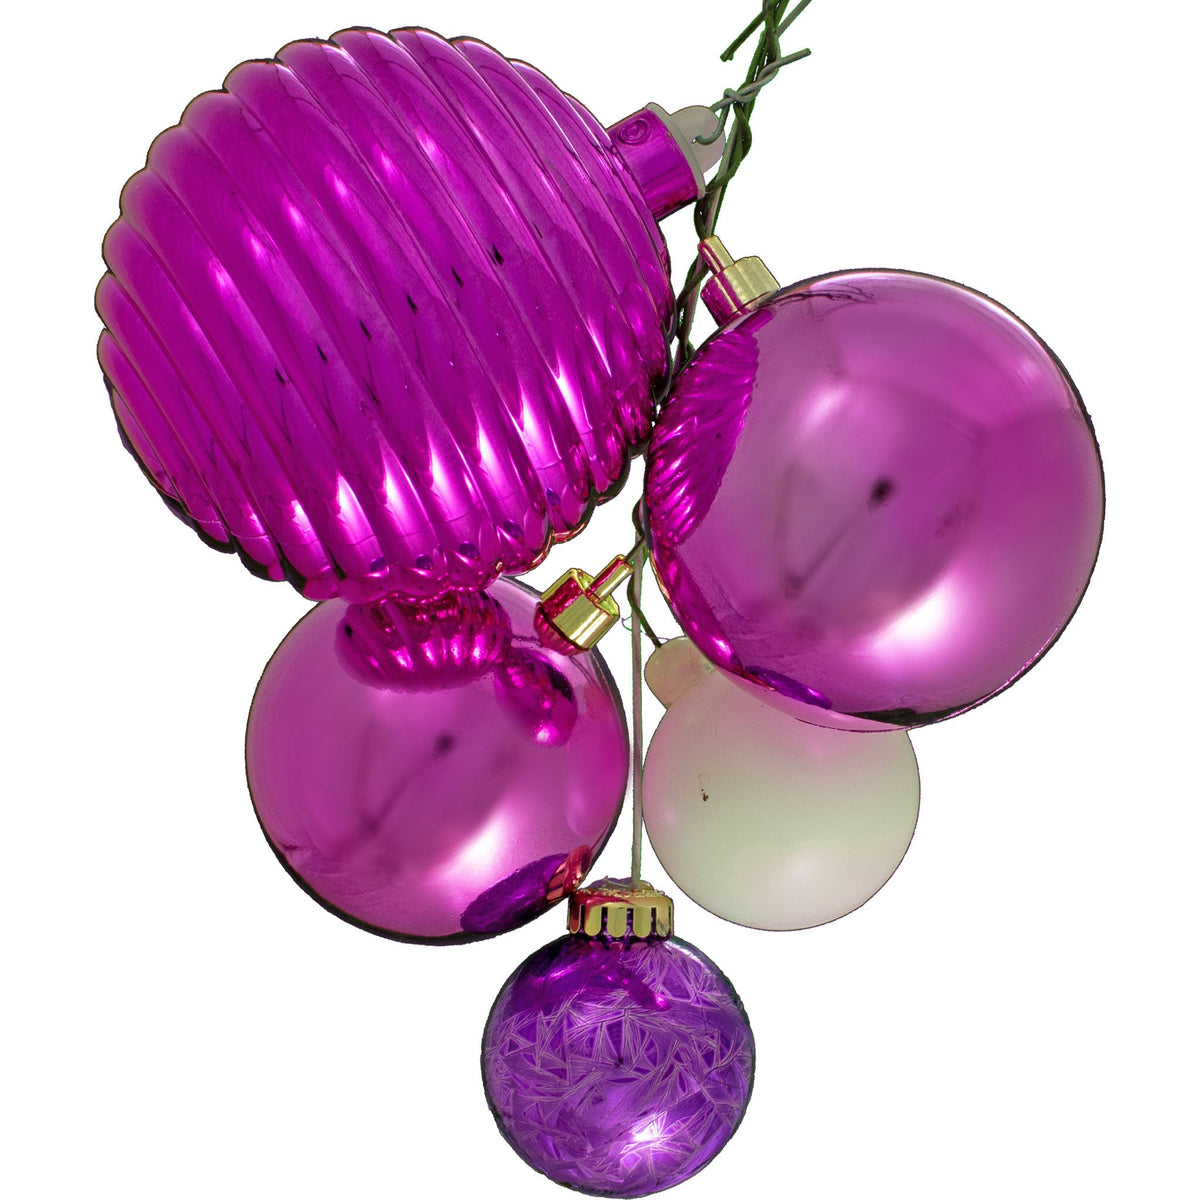 Colors include:  2 - Shiny Pink Ball Ornaments (80MM & 70MM) 1 - Matte White Ball Ornament (50MM) 1 - Fuschia Purple Ball Ornament (50MM) 1 - Ribbed Pink Ball Ornament (100MM)